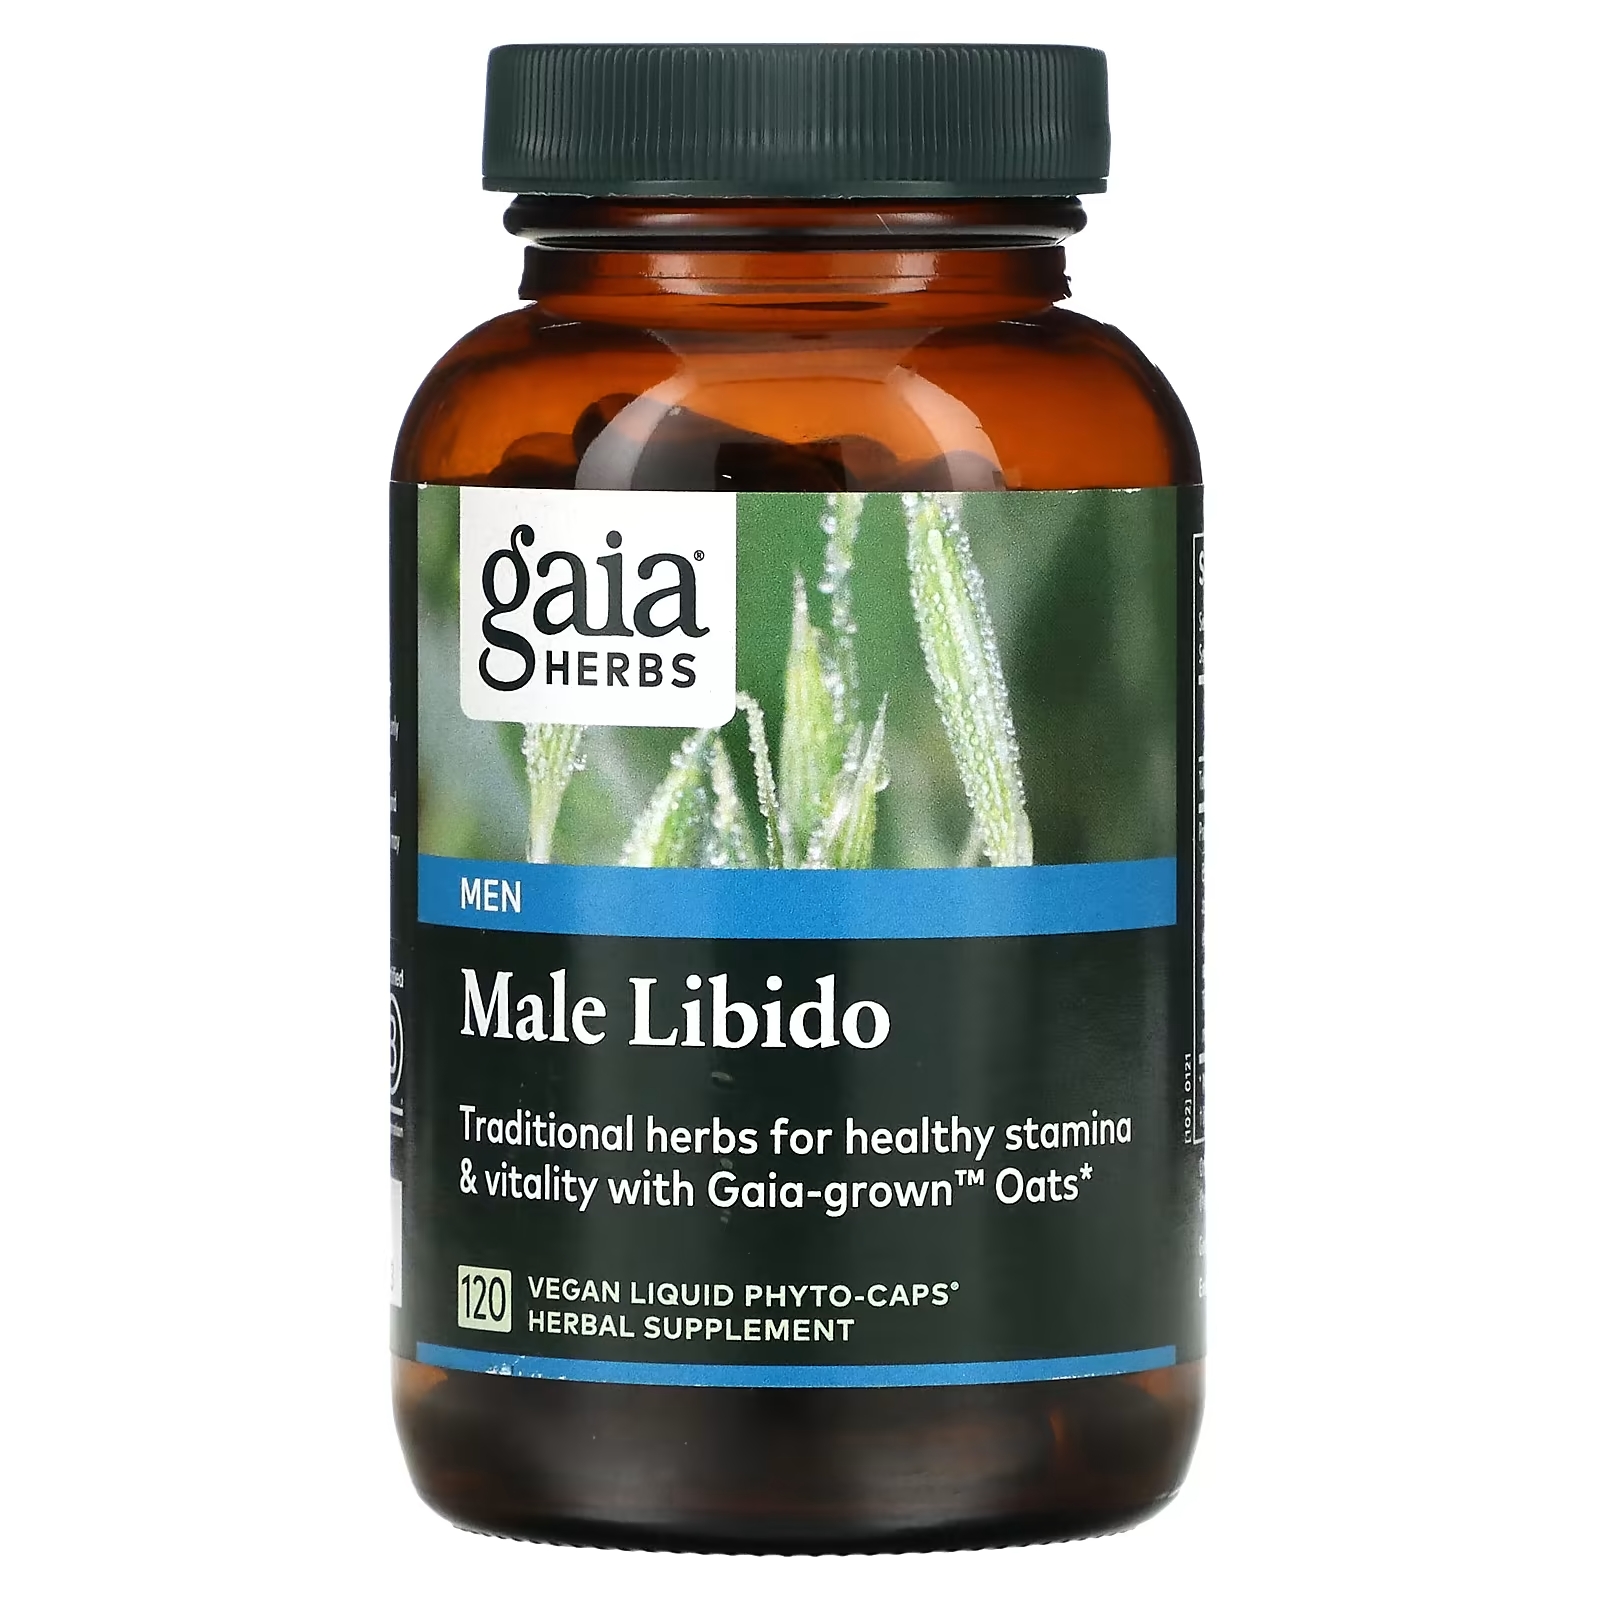 Gaia Herbs Для мужчин мужское либидо, 120 веганских капсул расторопша gaia herbs 120 веганских капсул